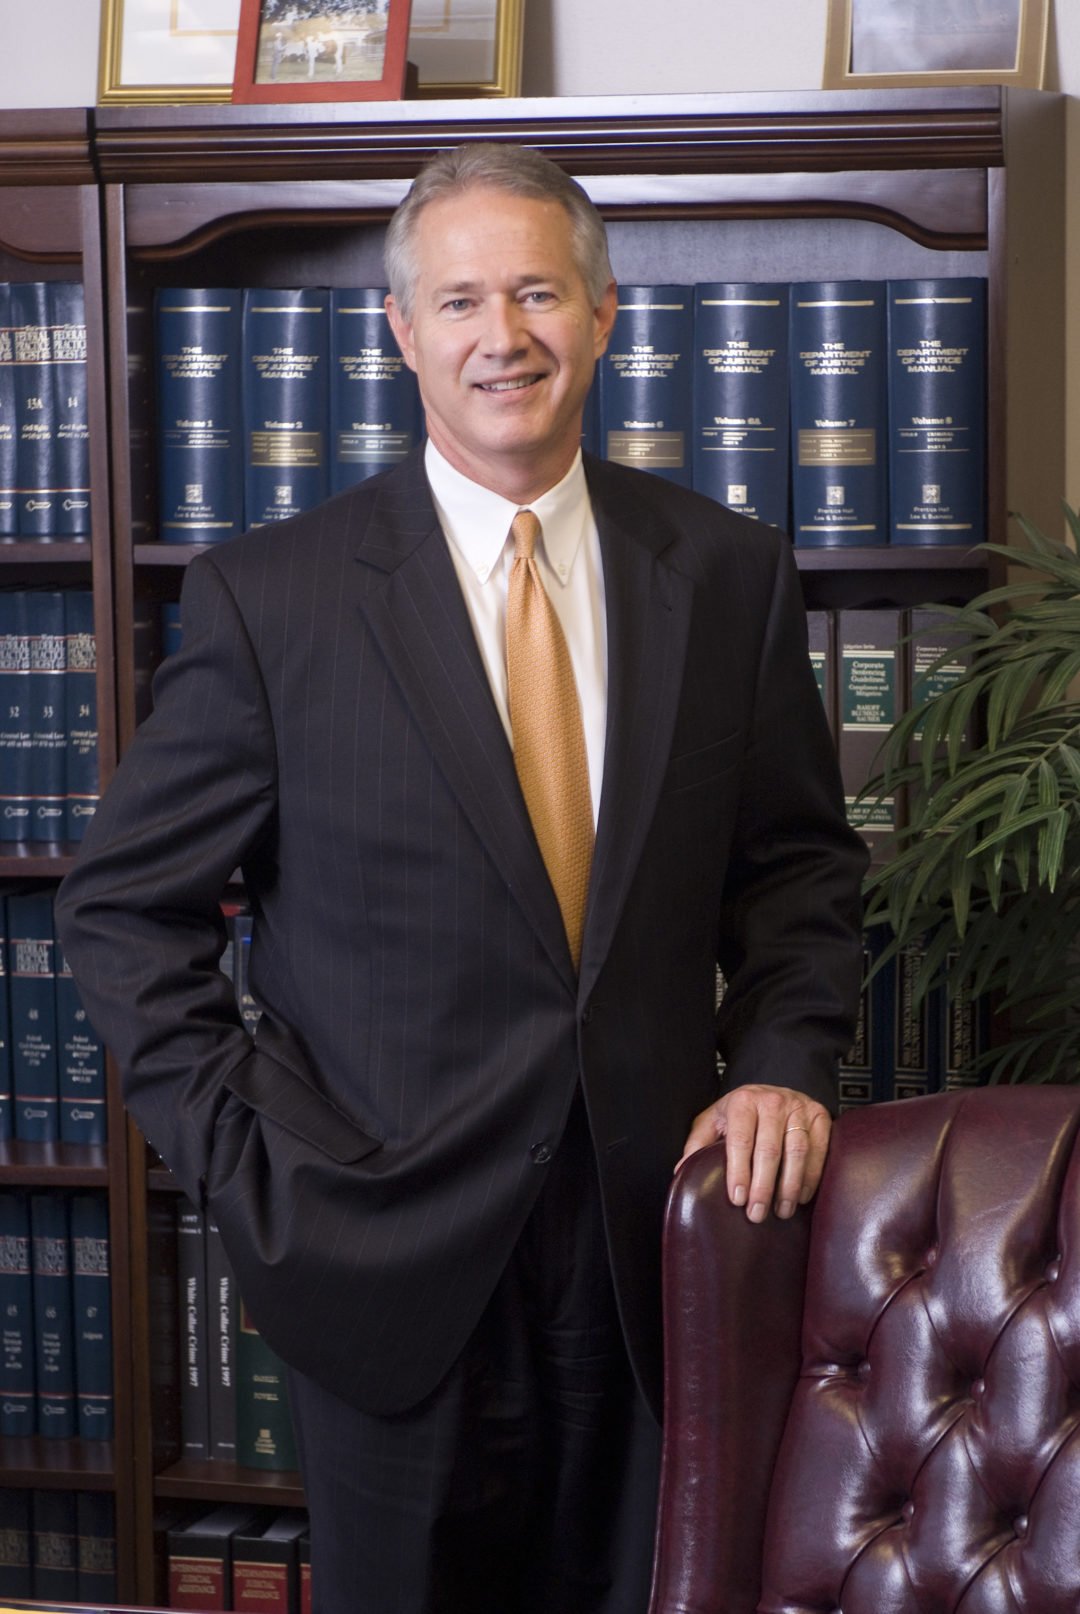 Dallas defense attorney